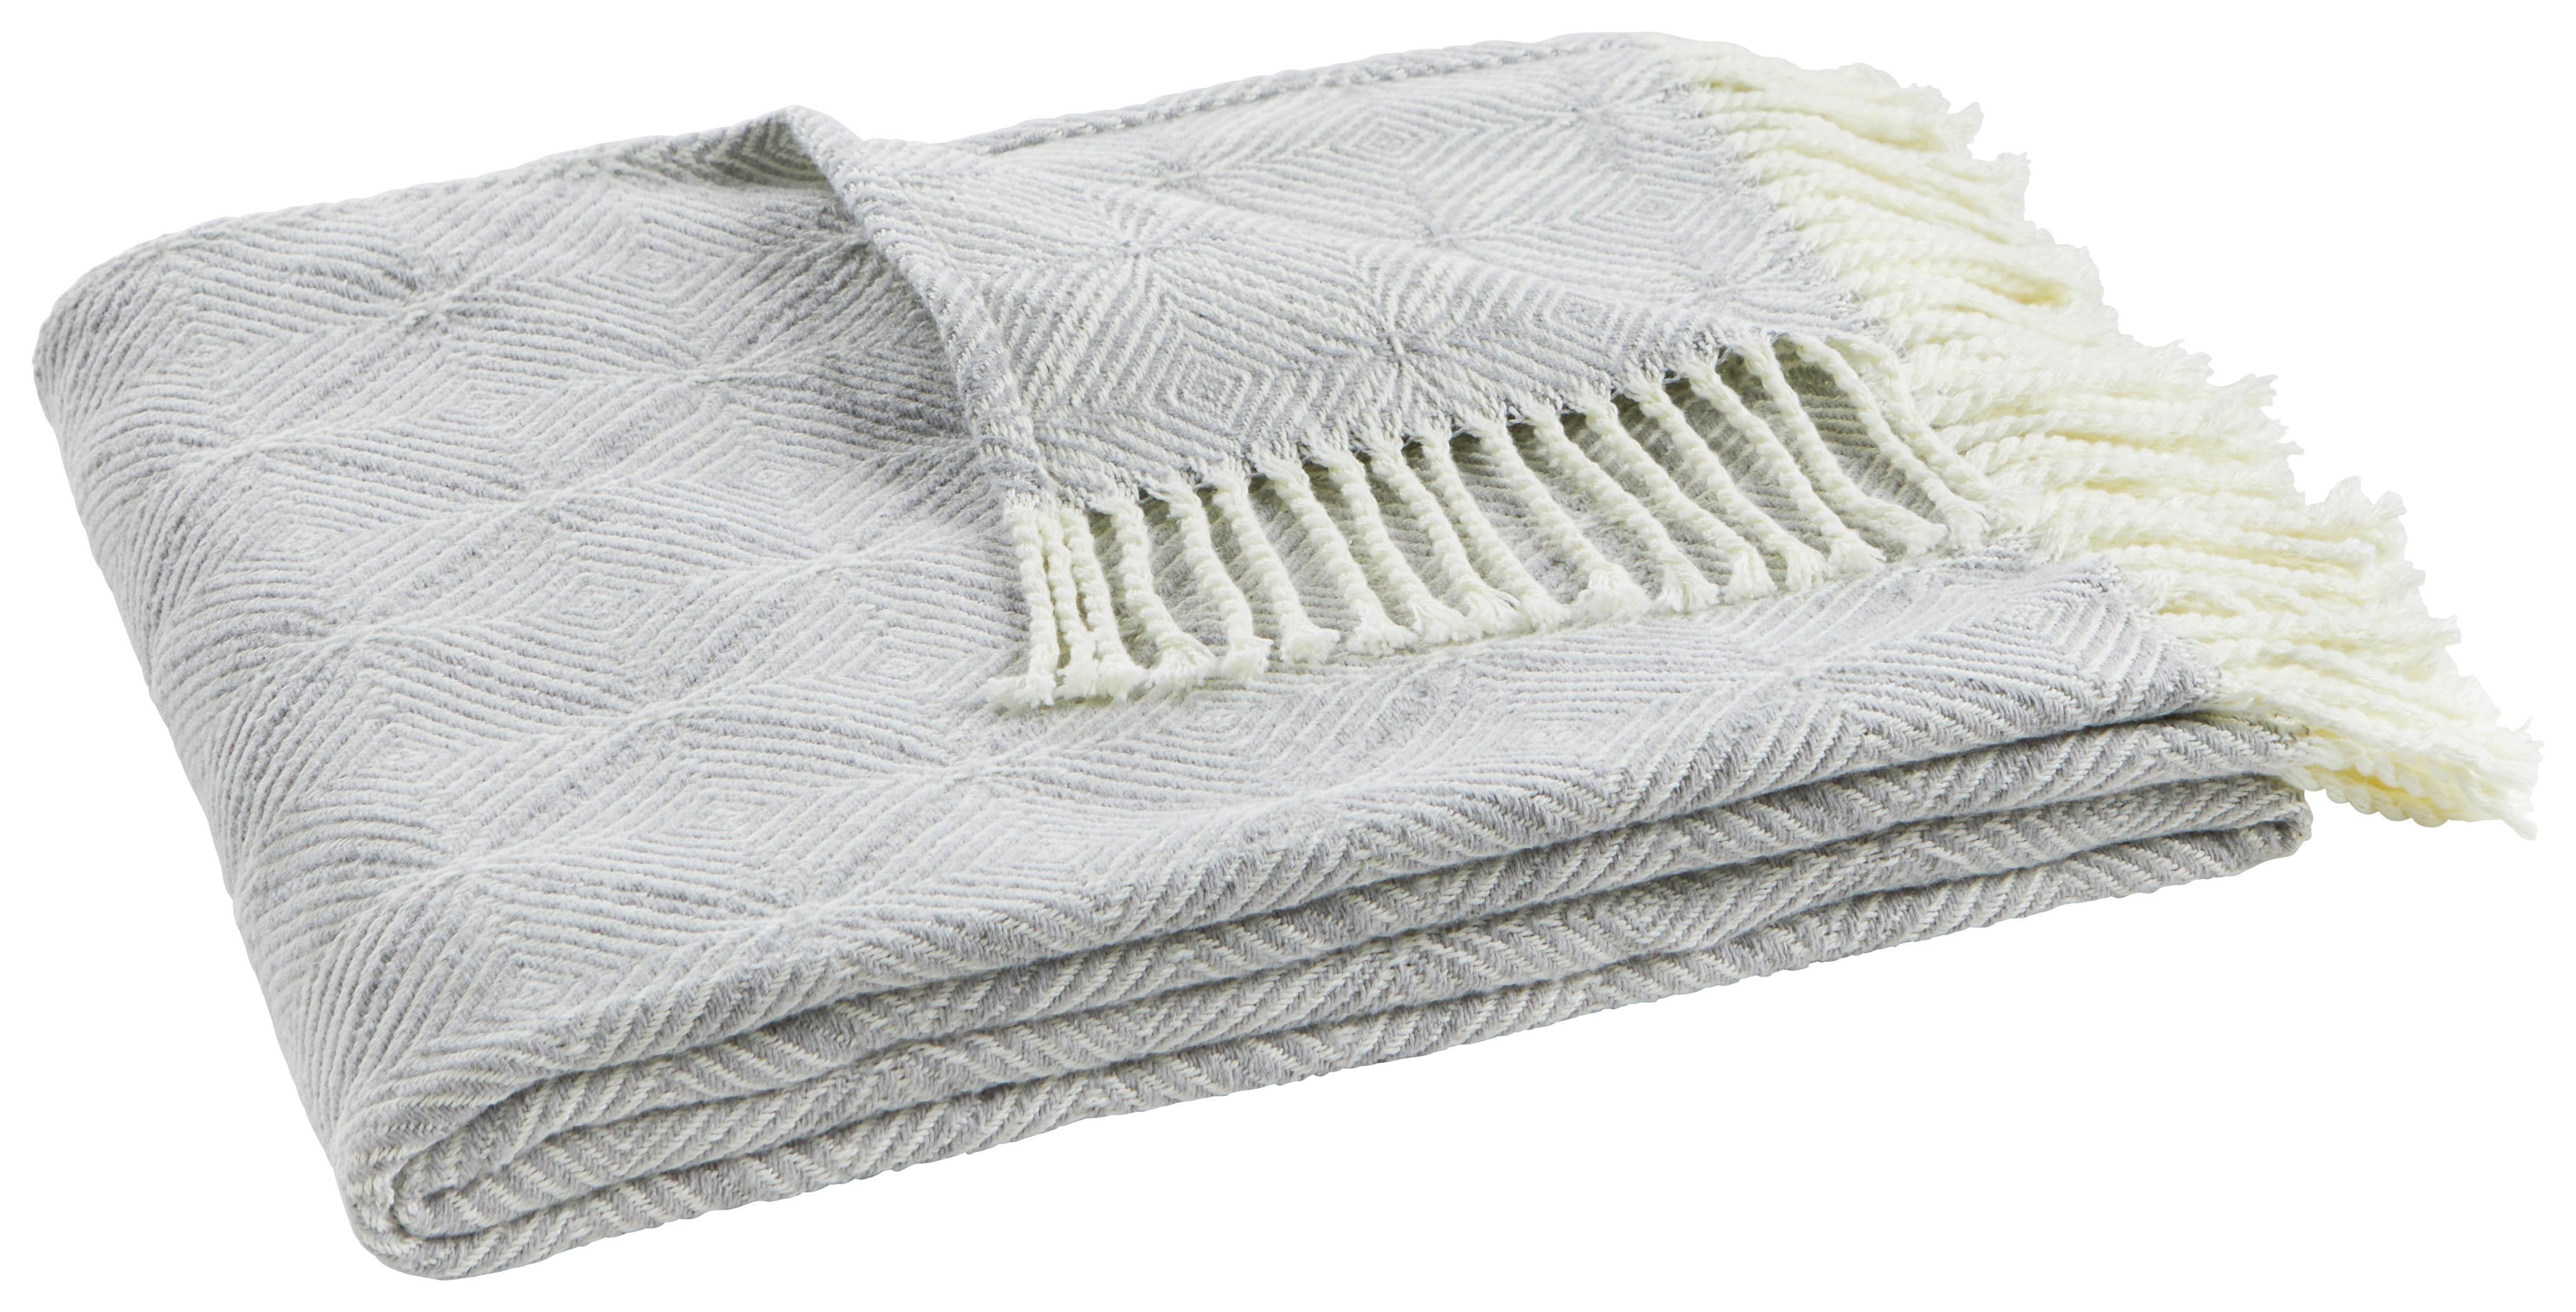 Decke Samira in Grau/Natur ca. 130x170cm - Naturfarben/Grau, LIFESTYLE, Textil (130/170cm) - Modern Living